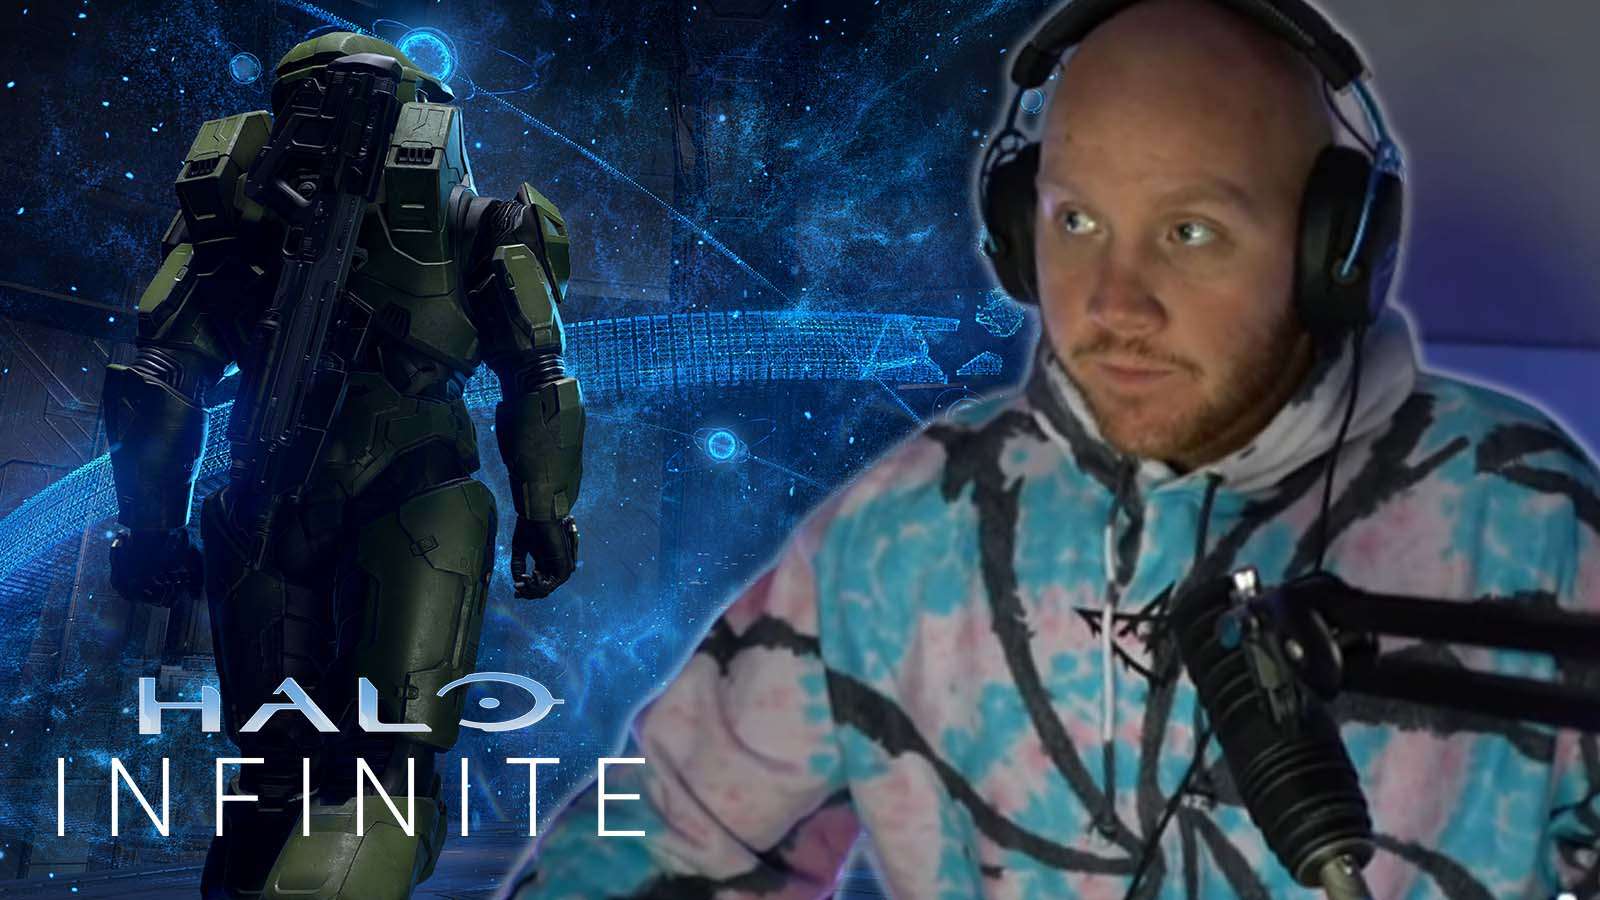 TimtheTatman calls for Halo Infinite to get battle royale mode